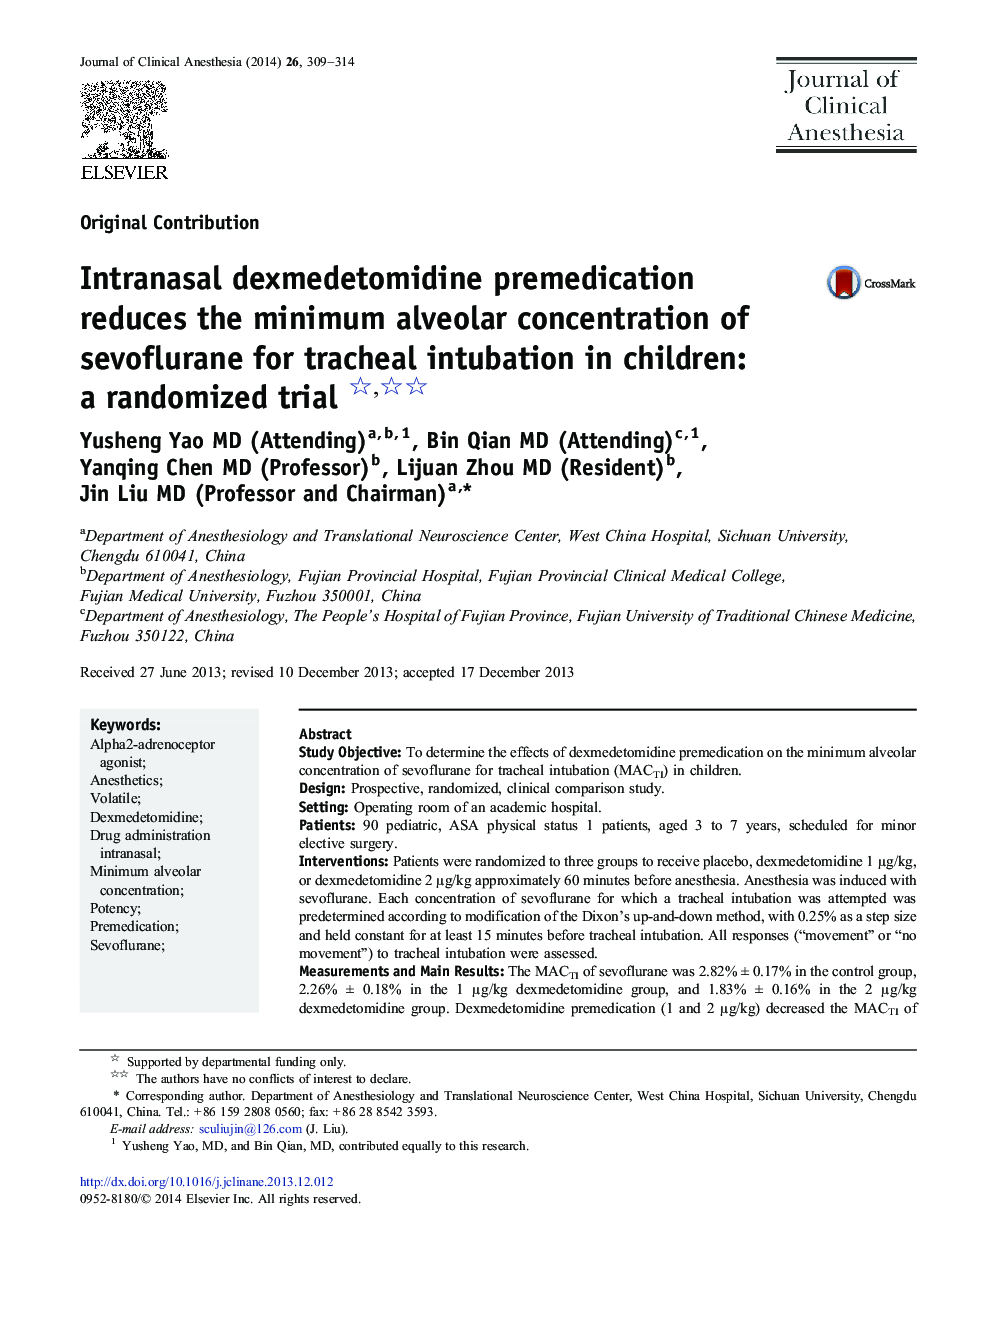 Intranasal dexmedetomidine premedication reduces the minimum alveolar concentration of sevoflurane for tracheal intubation in children: a randomized trial 